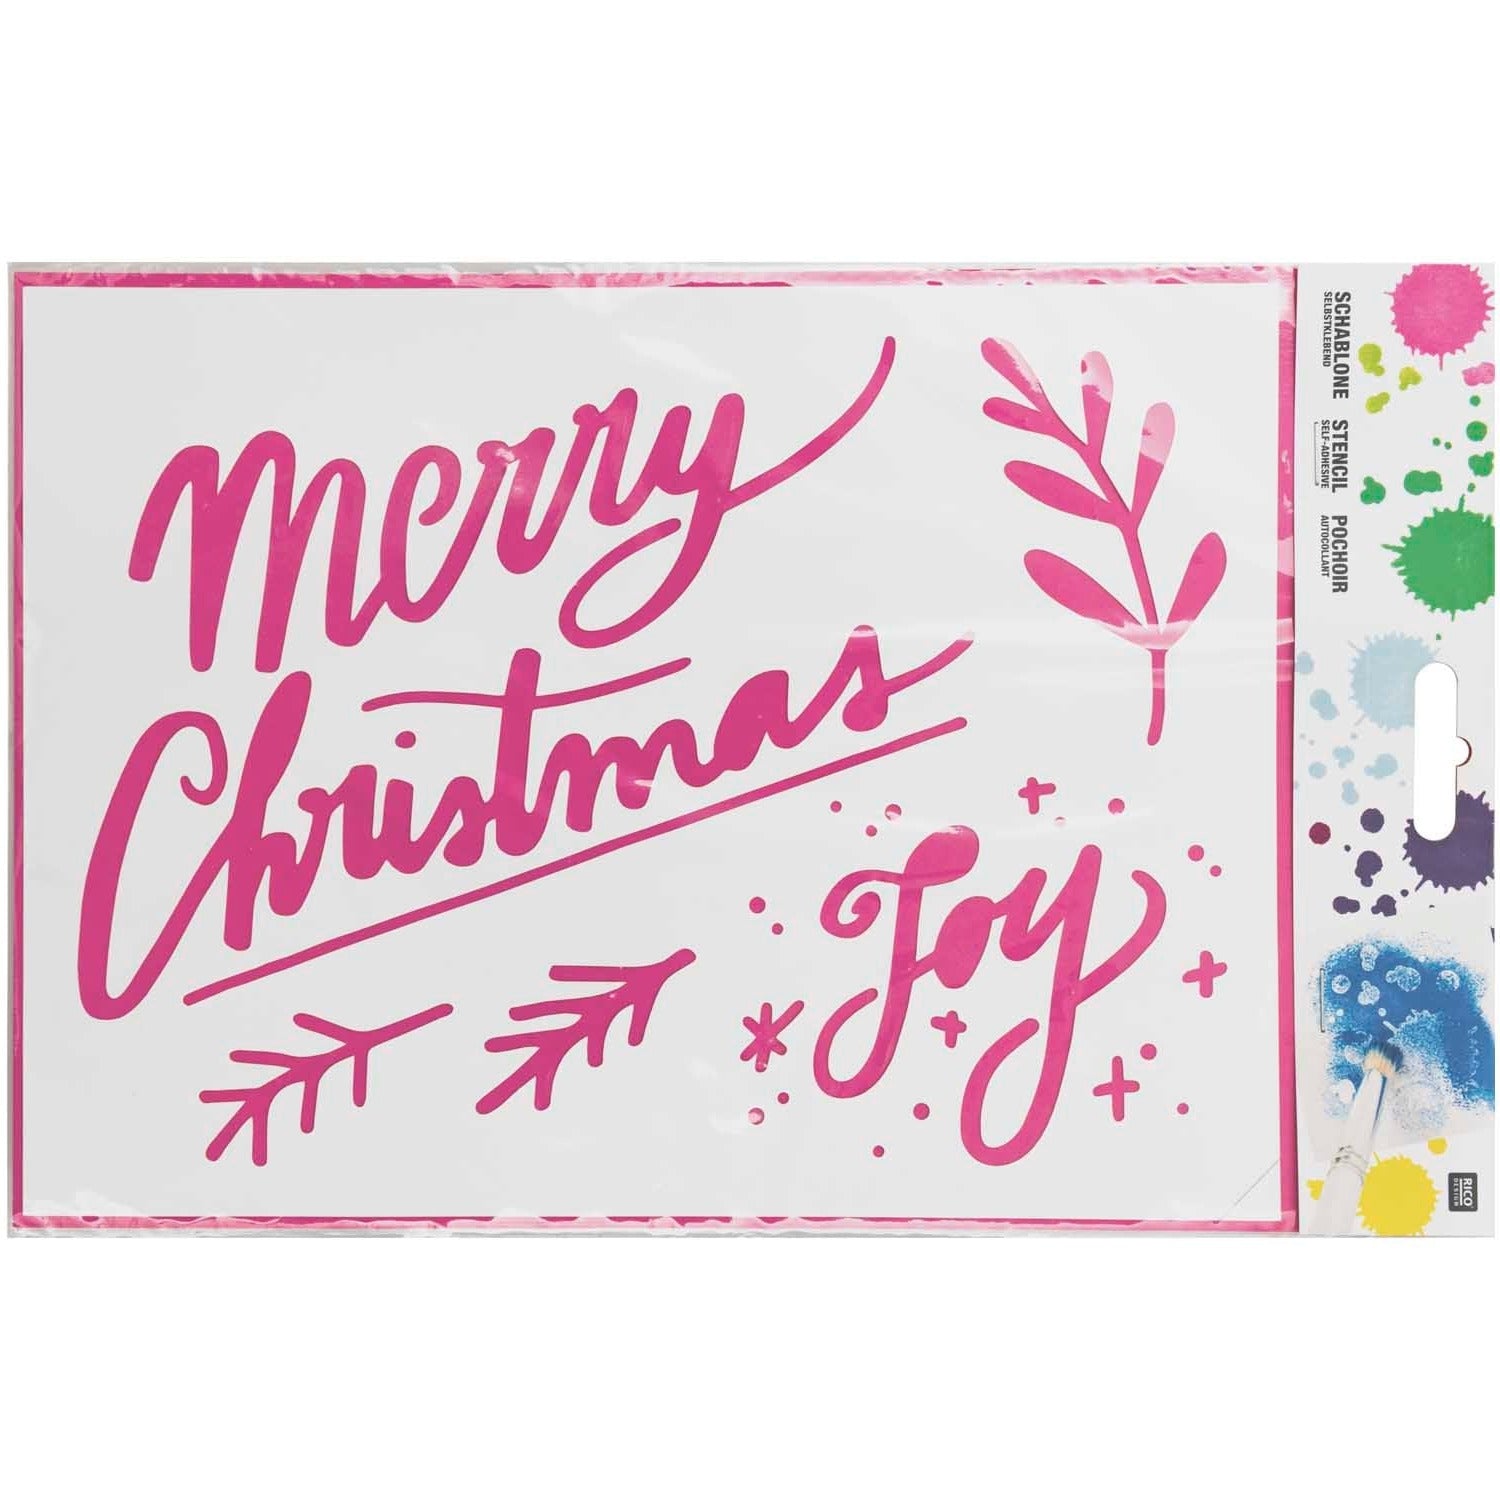 Rico Design Medium Self Adhesive Stencil - Merry Christmas